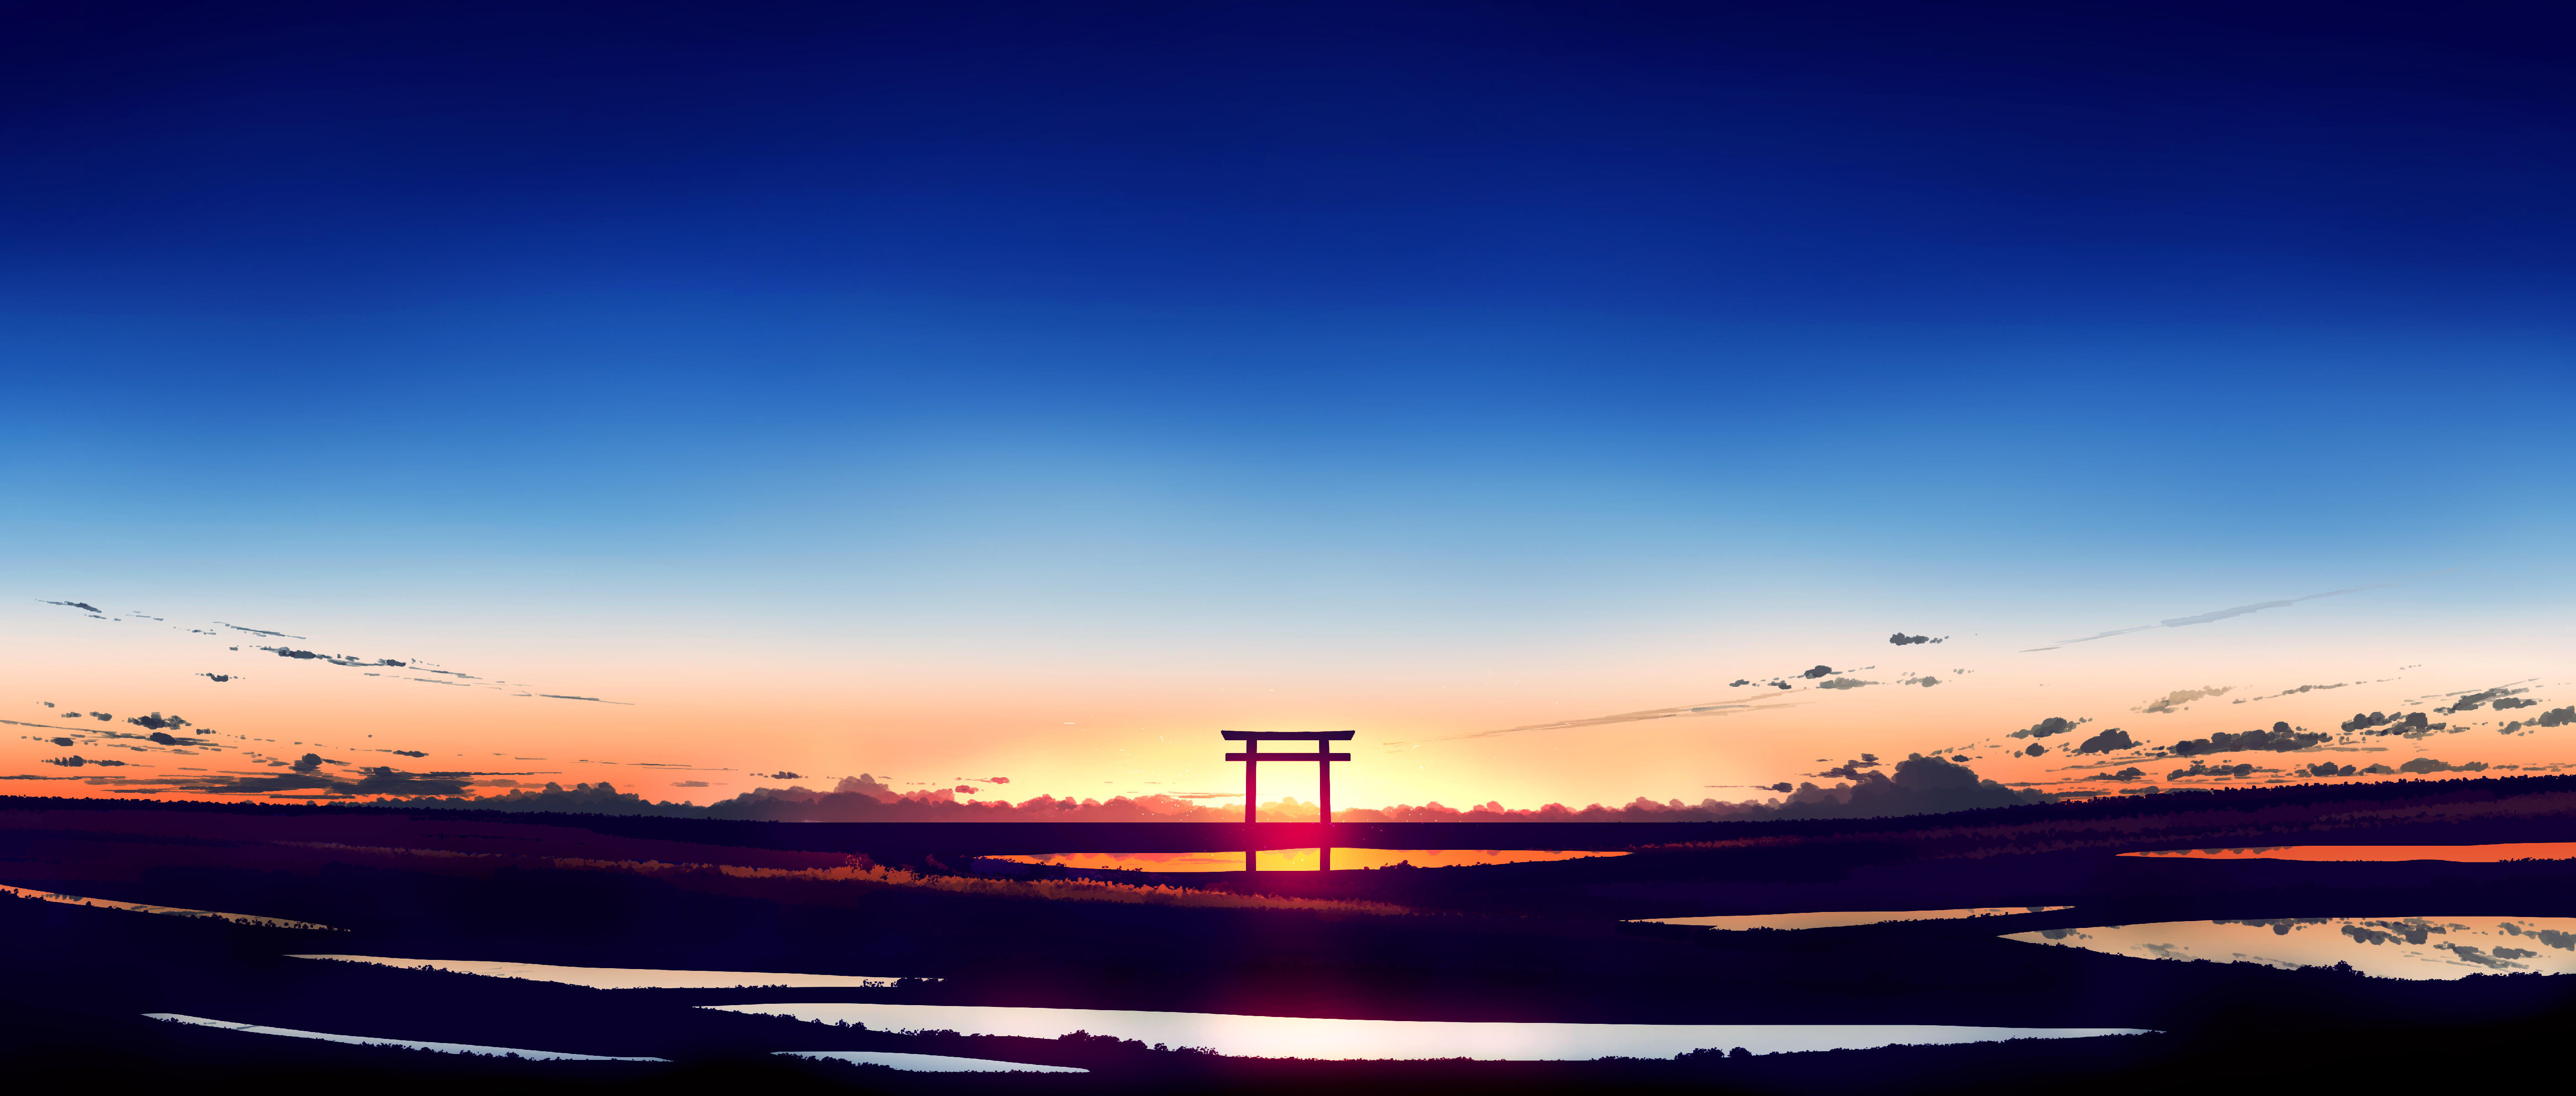 General 5640x2400 Gracile digital art artwork illustration torii Japan landscape wide screen ultrawide sunset sunset glow clouds